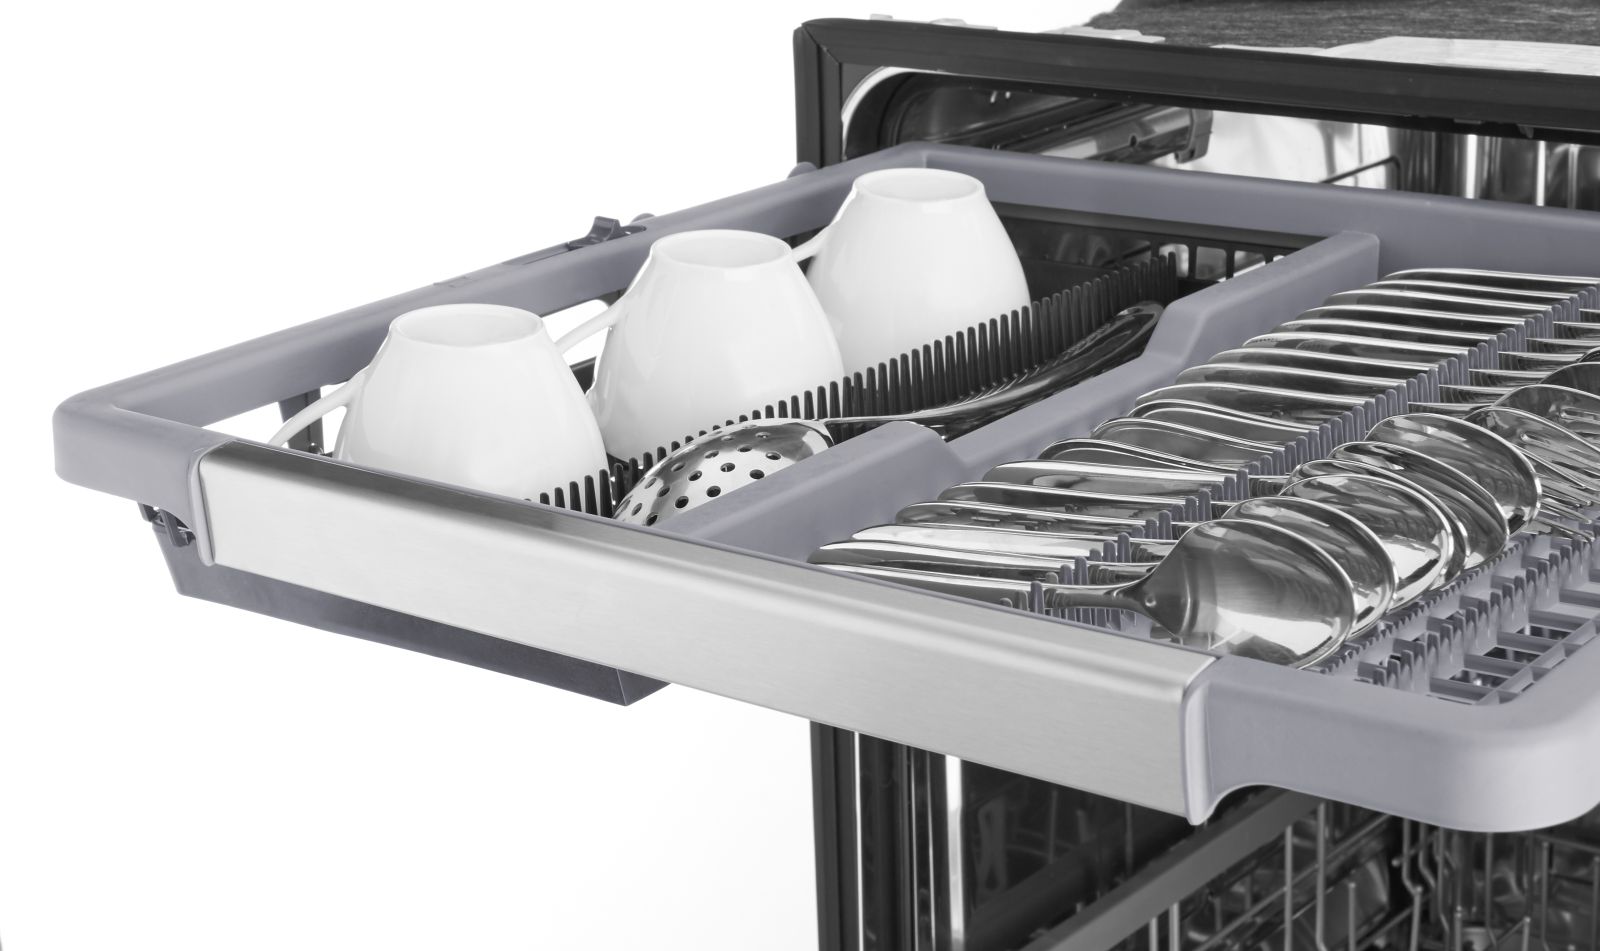 kenmore elite 14677 smart dishwasher reviews